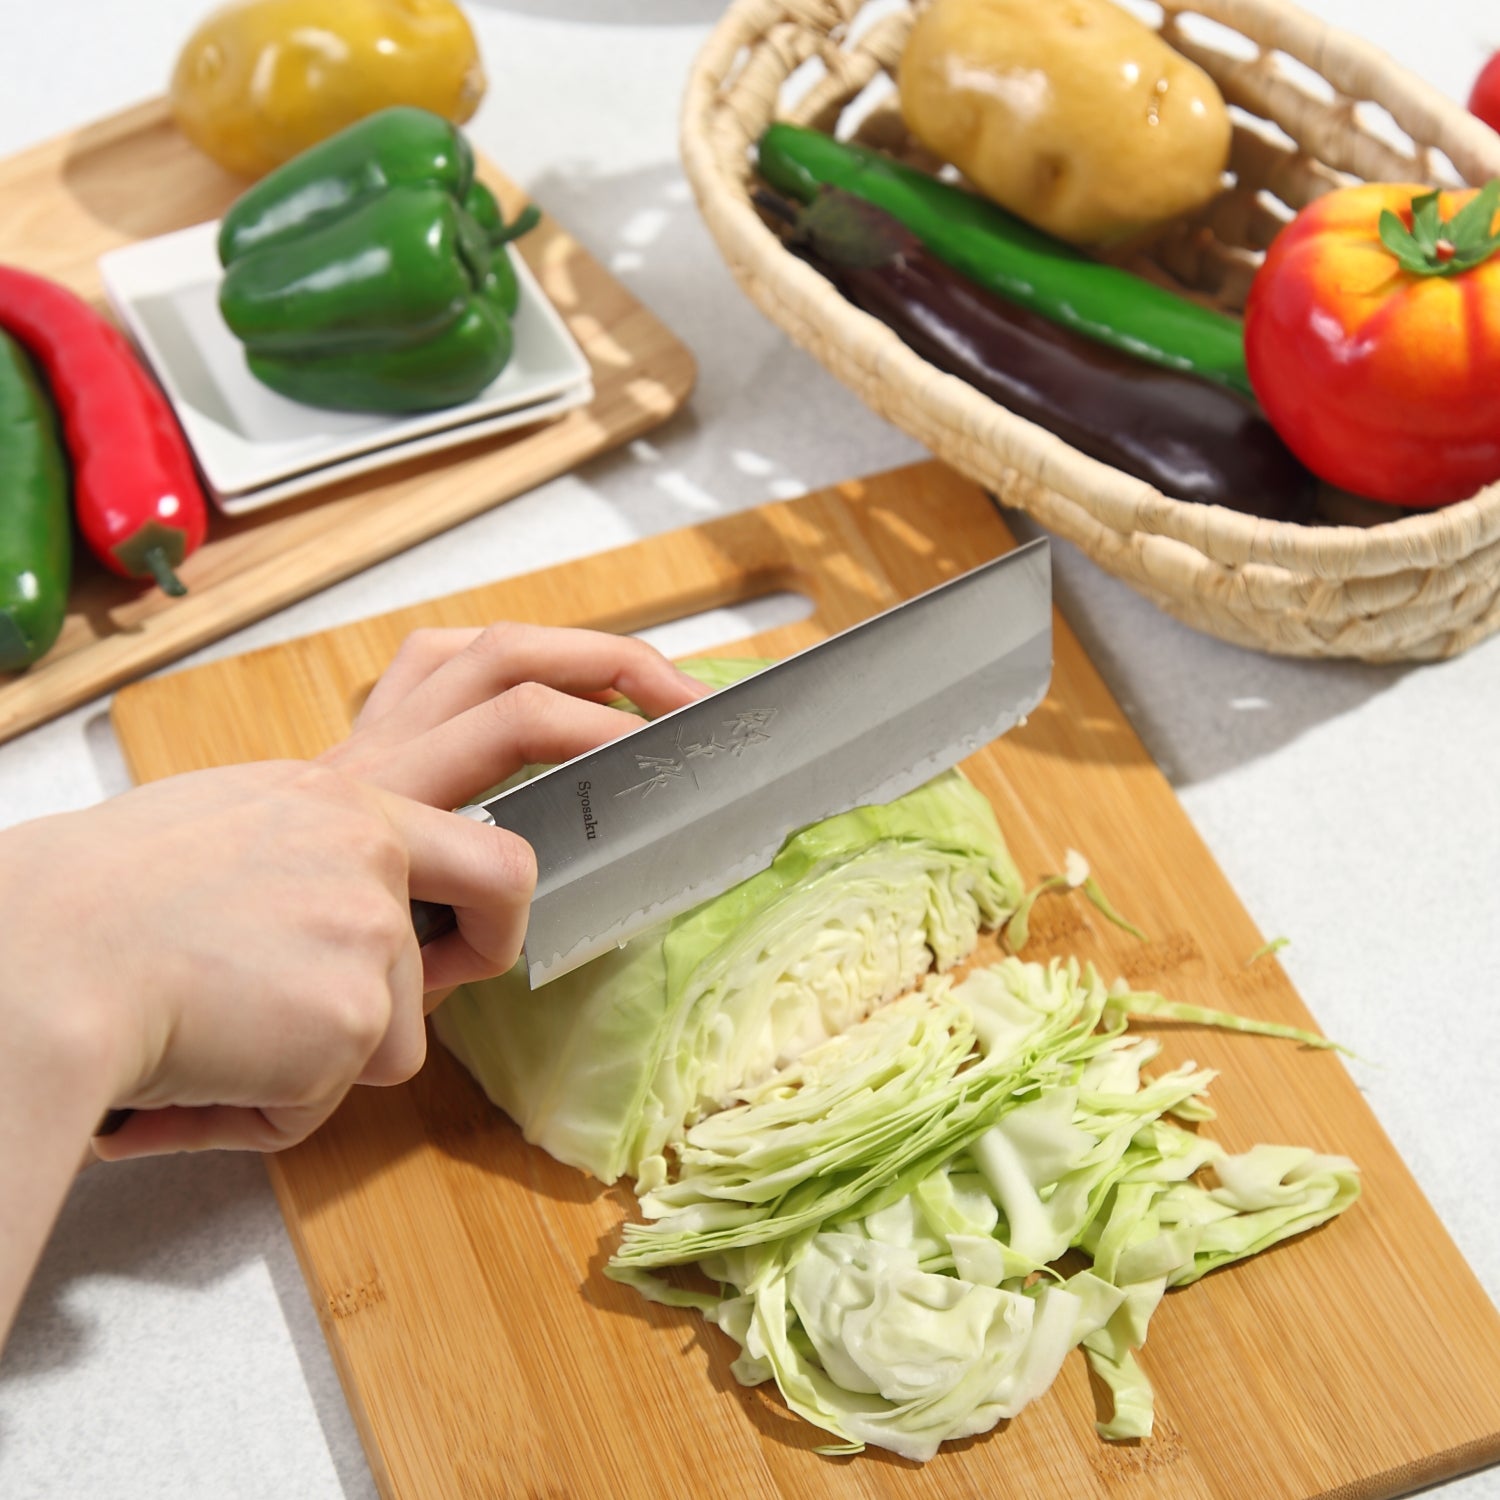 Buy a 6 Japanese Nakiri Vegetable Knife for Those Fine Slices